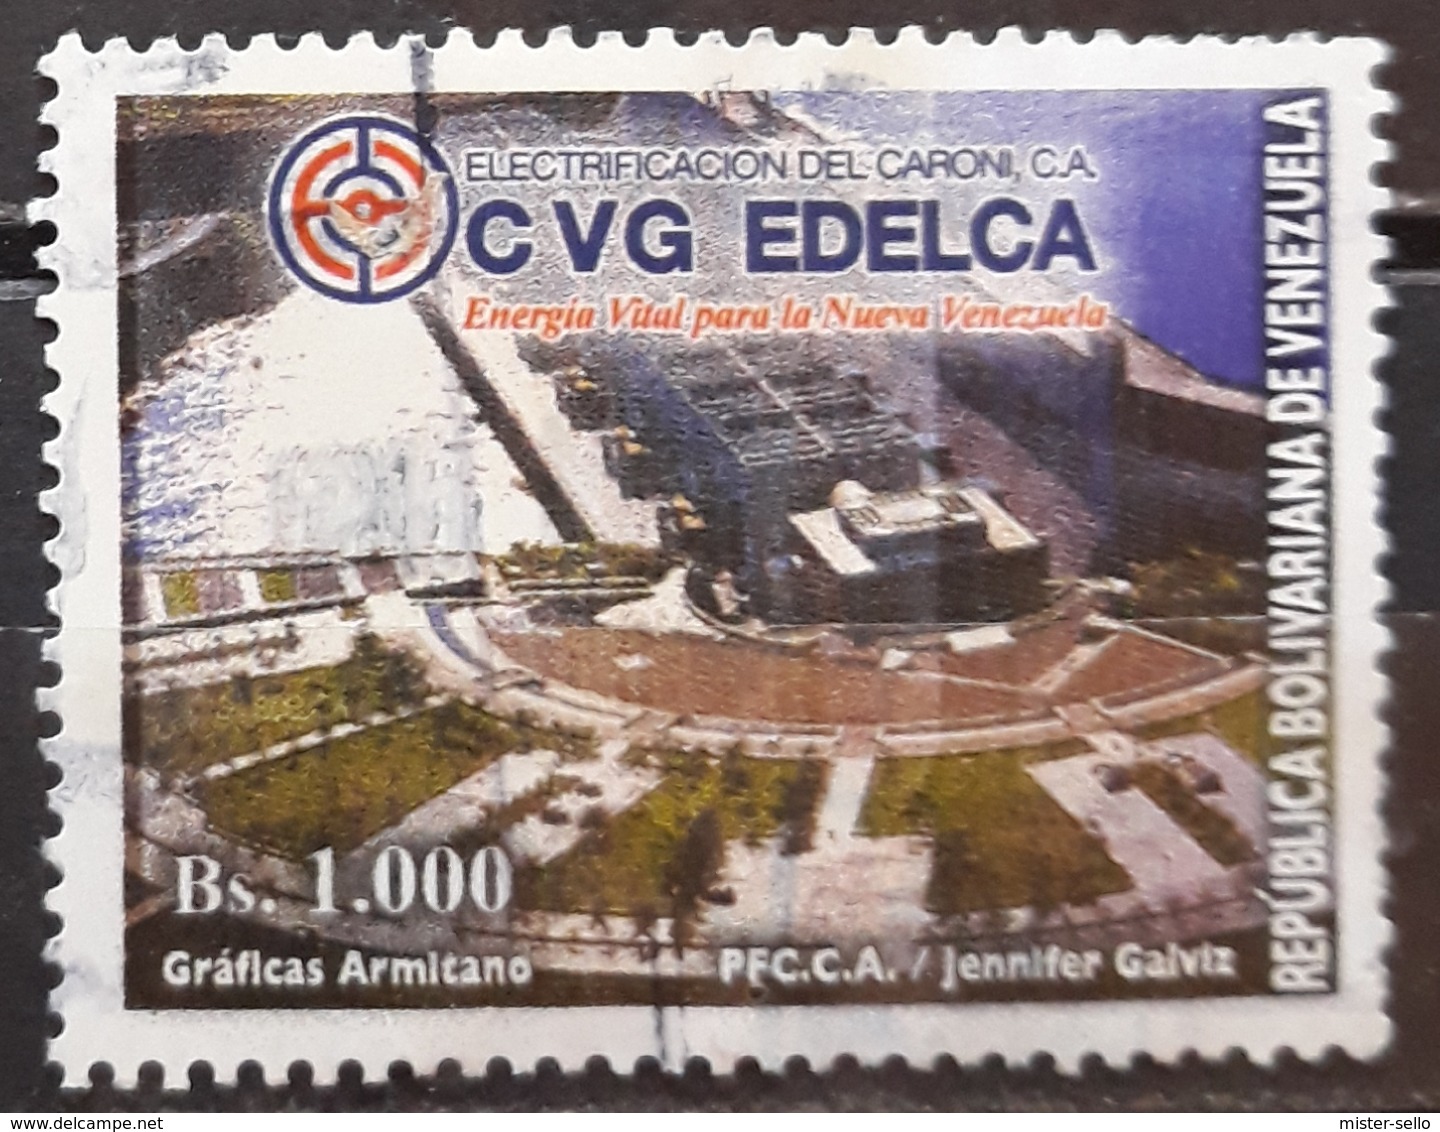 VENEZUELA 2004 CVG EDELCA, Electricity Providers. USADO - USED. - Venezuela